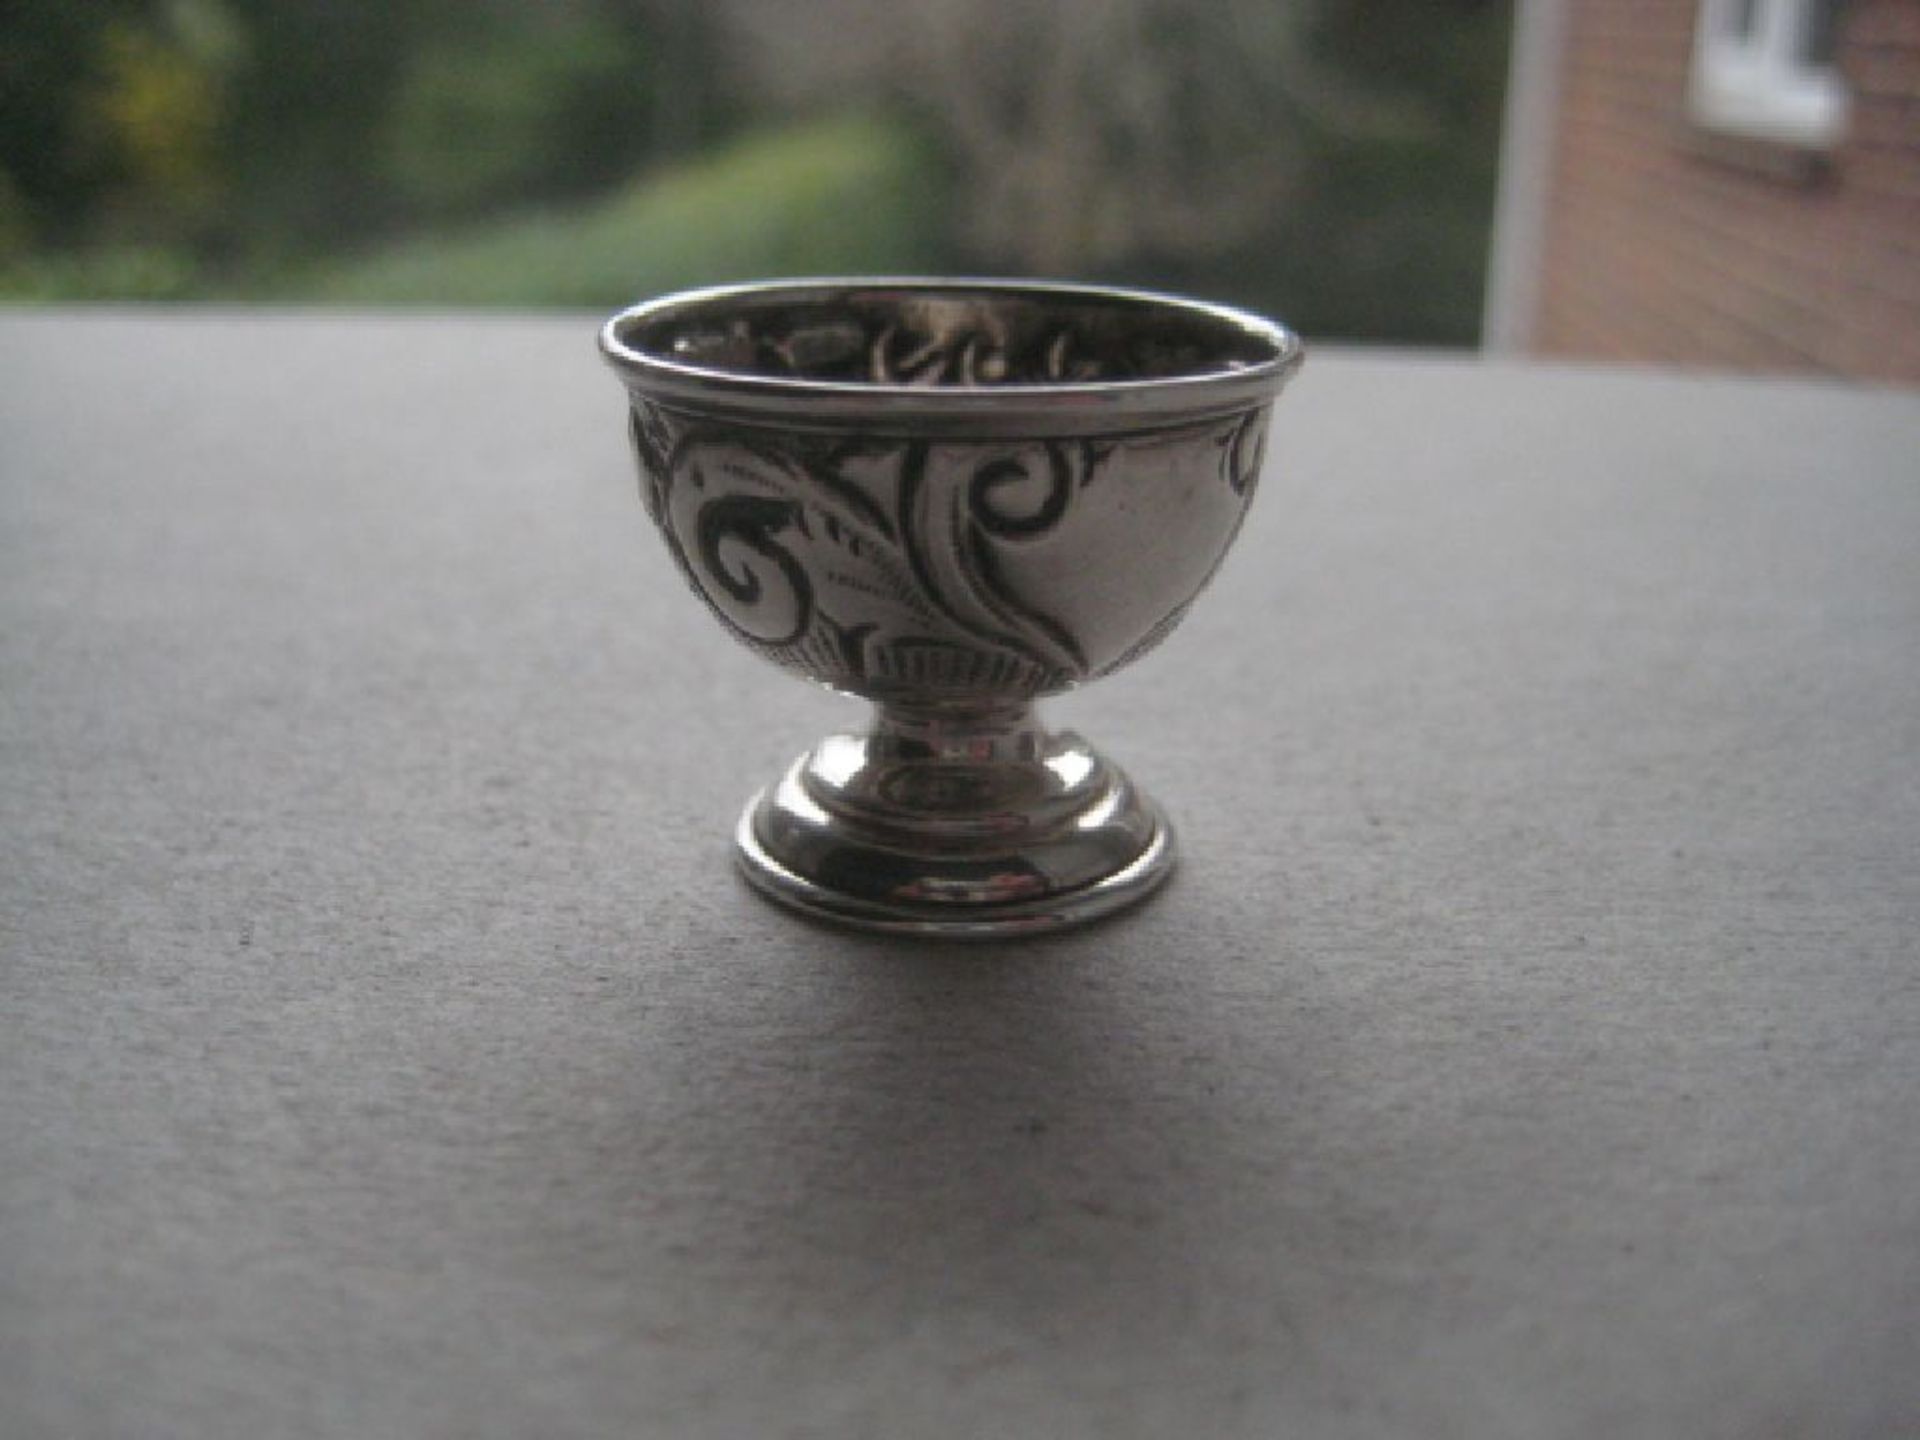 Antique Miniature Silver Bowl, Birmingham 1907 - Image 10 of 10